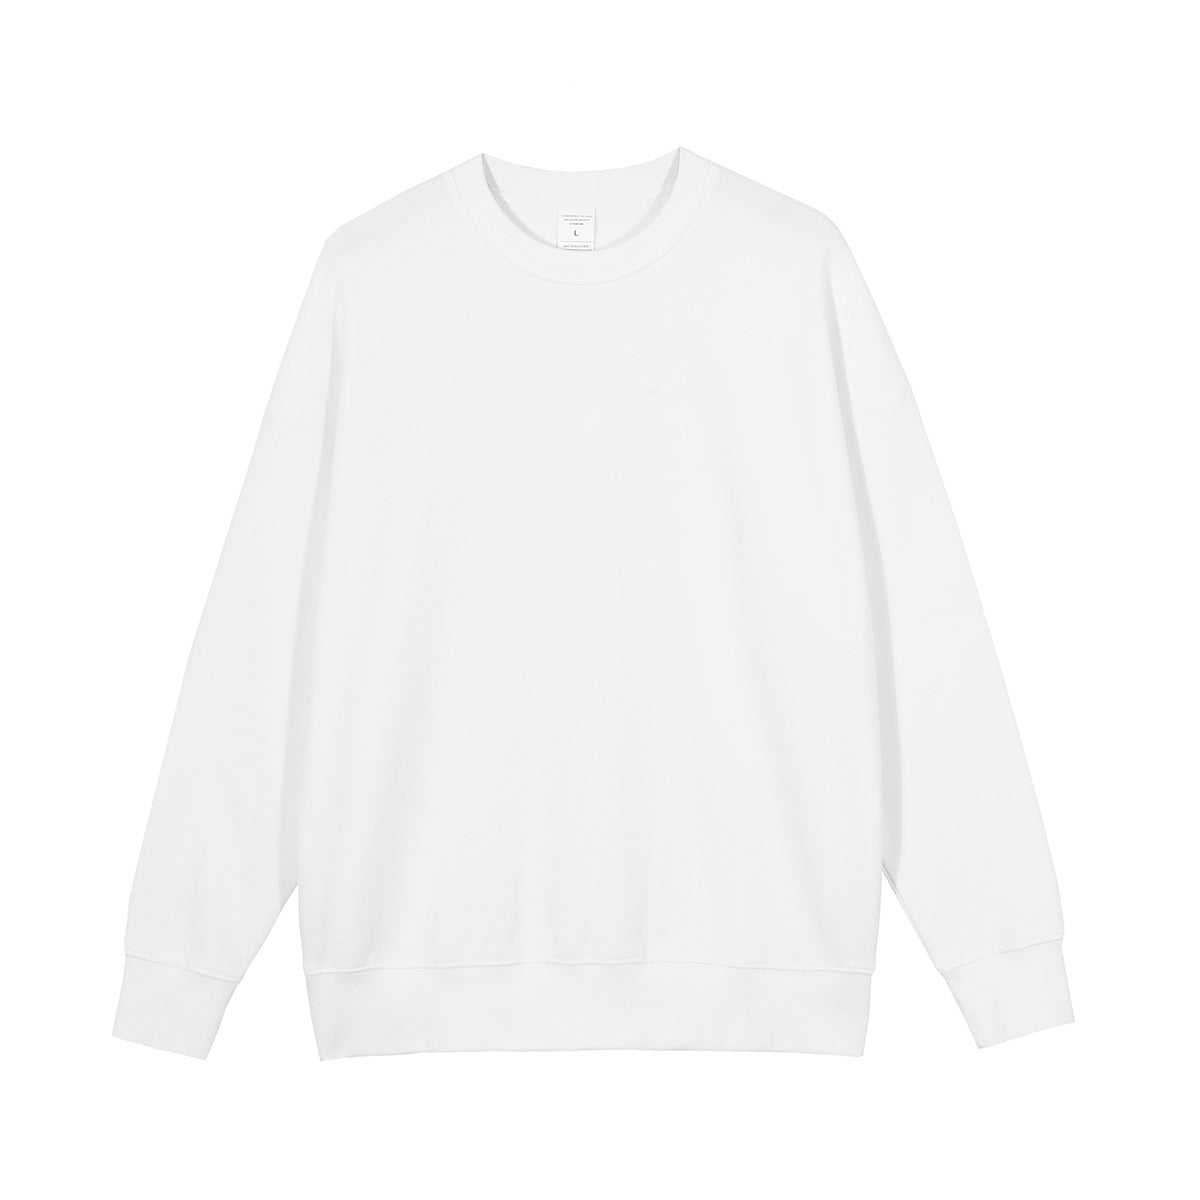 JUSTNOTAG Unisex Casual 100%Cotton Sweatshirt